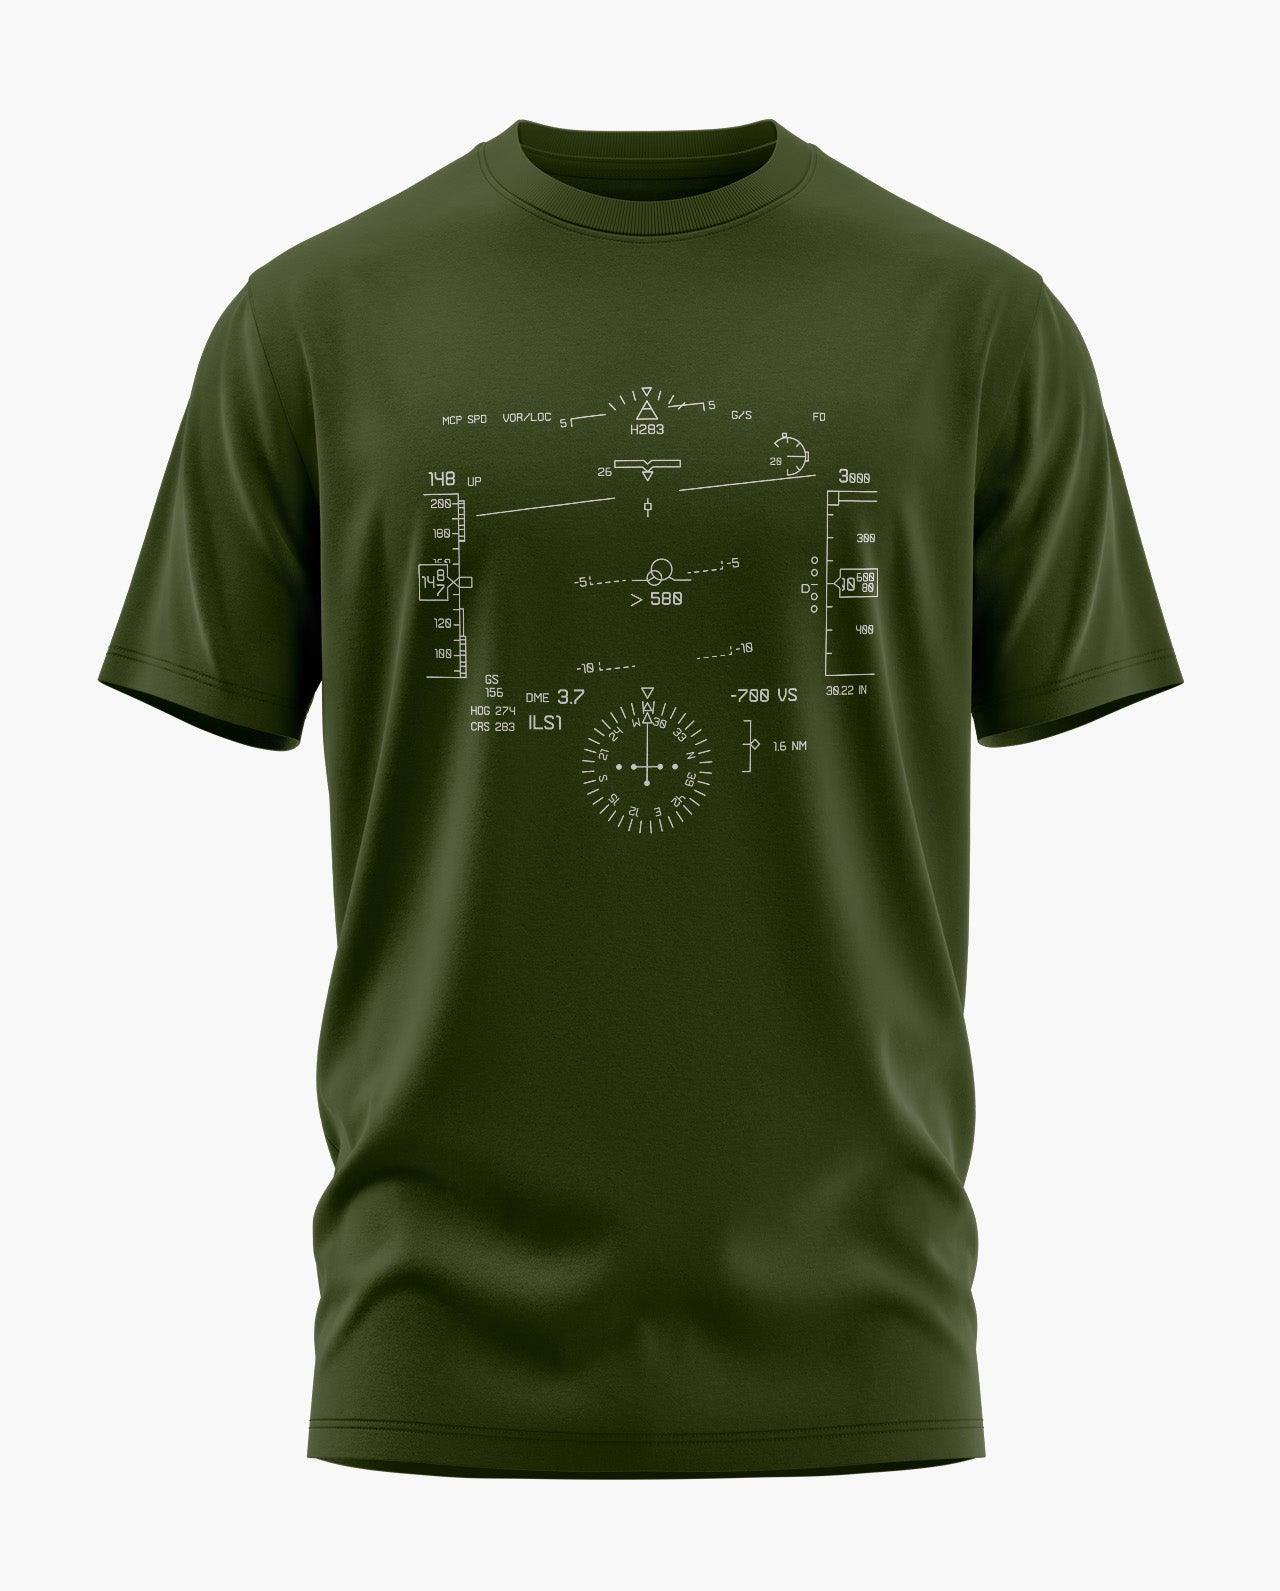 Heads Up Display T-Shirt - Aero Armour